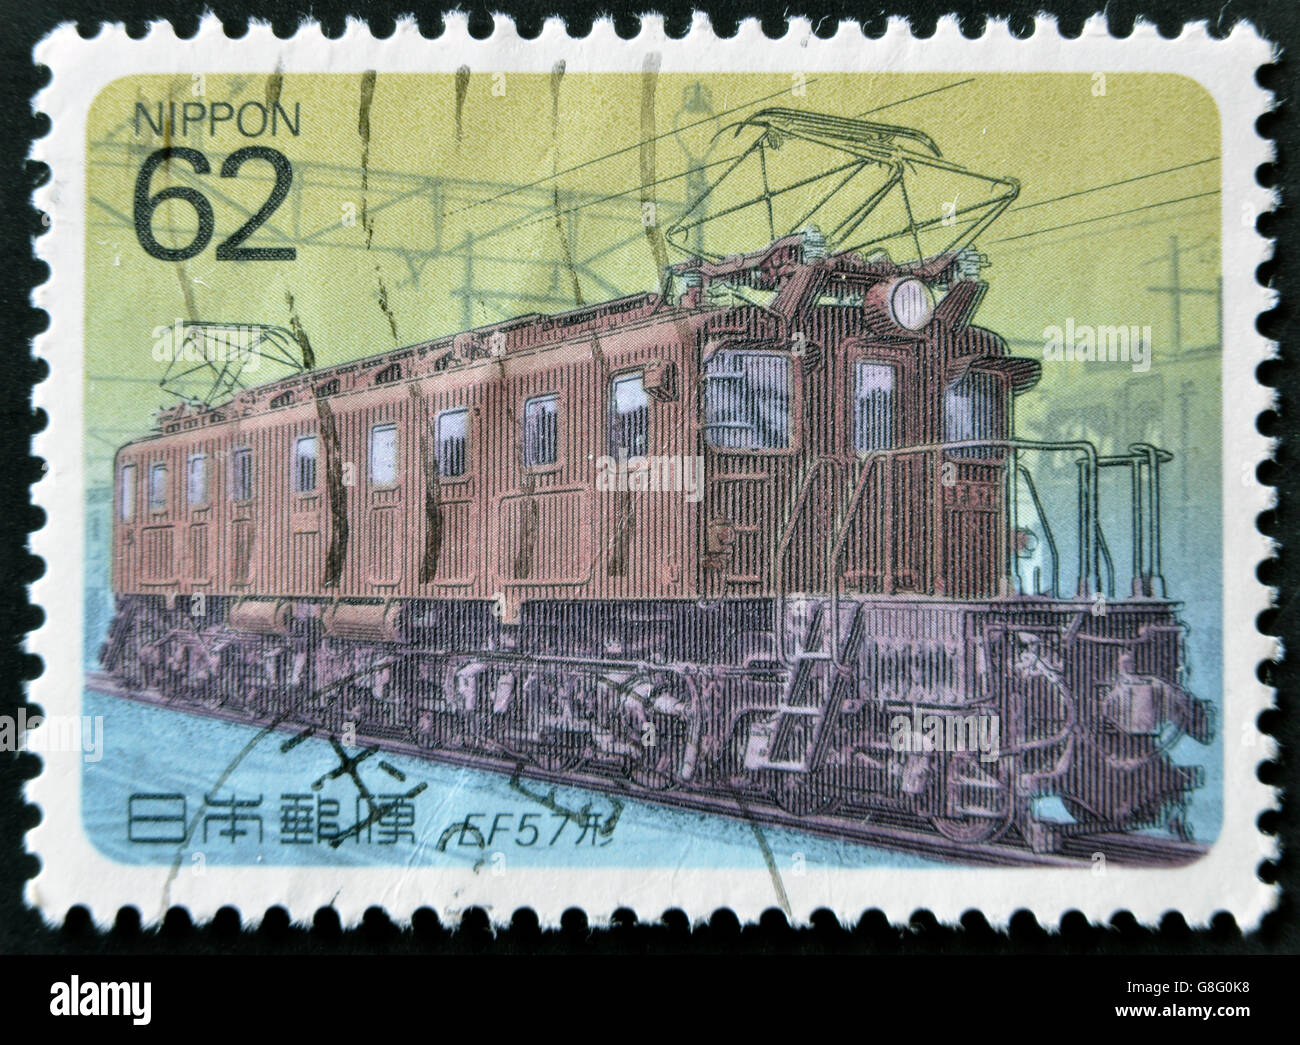 JAPAN - CIRCA 1990: A stamp printed in Japan shows Electric Locomotive, circa 1990 Stock Photo